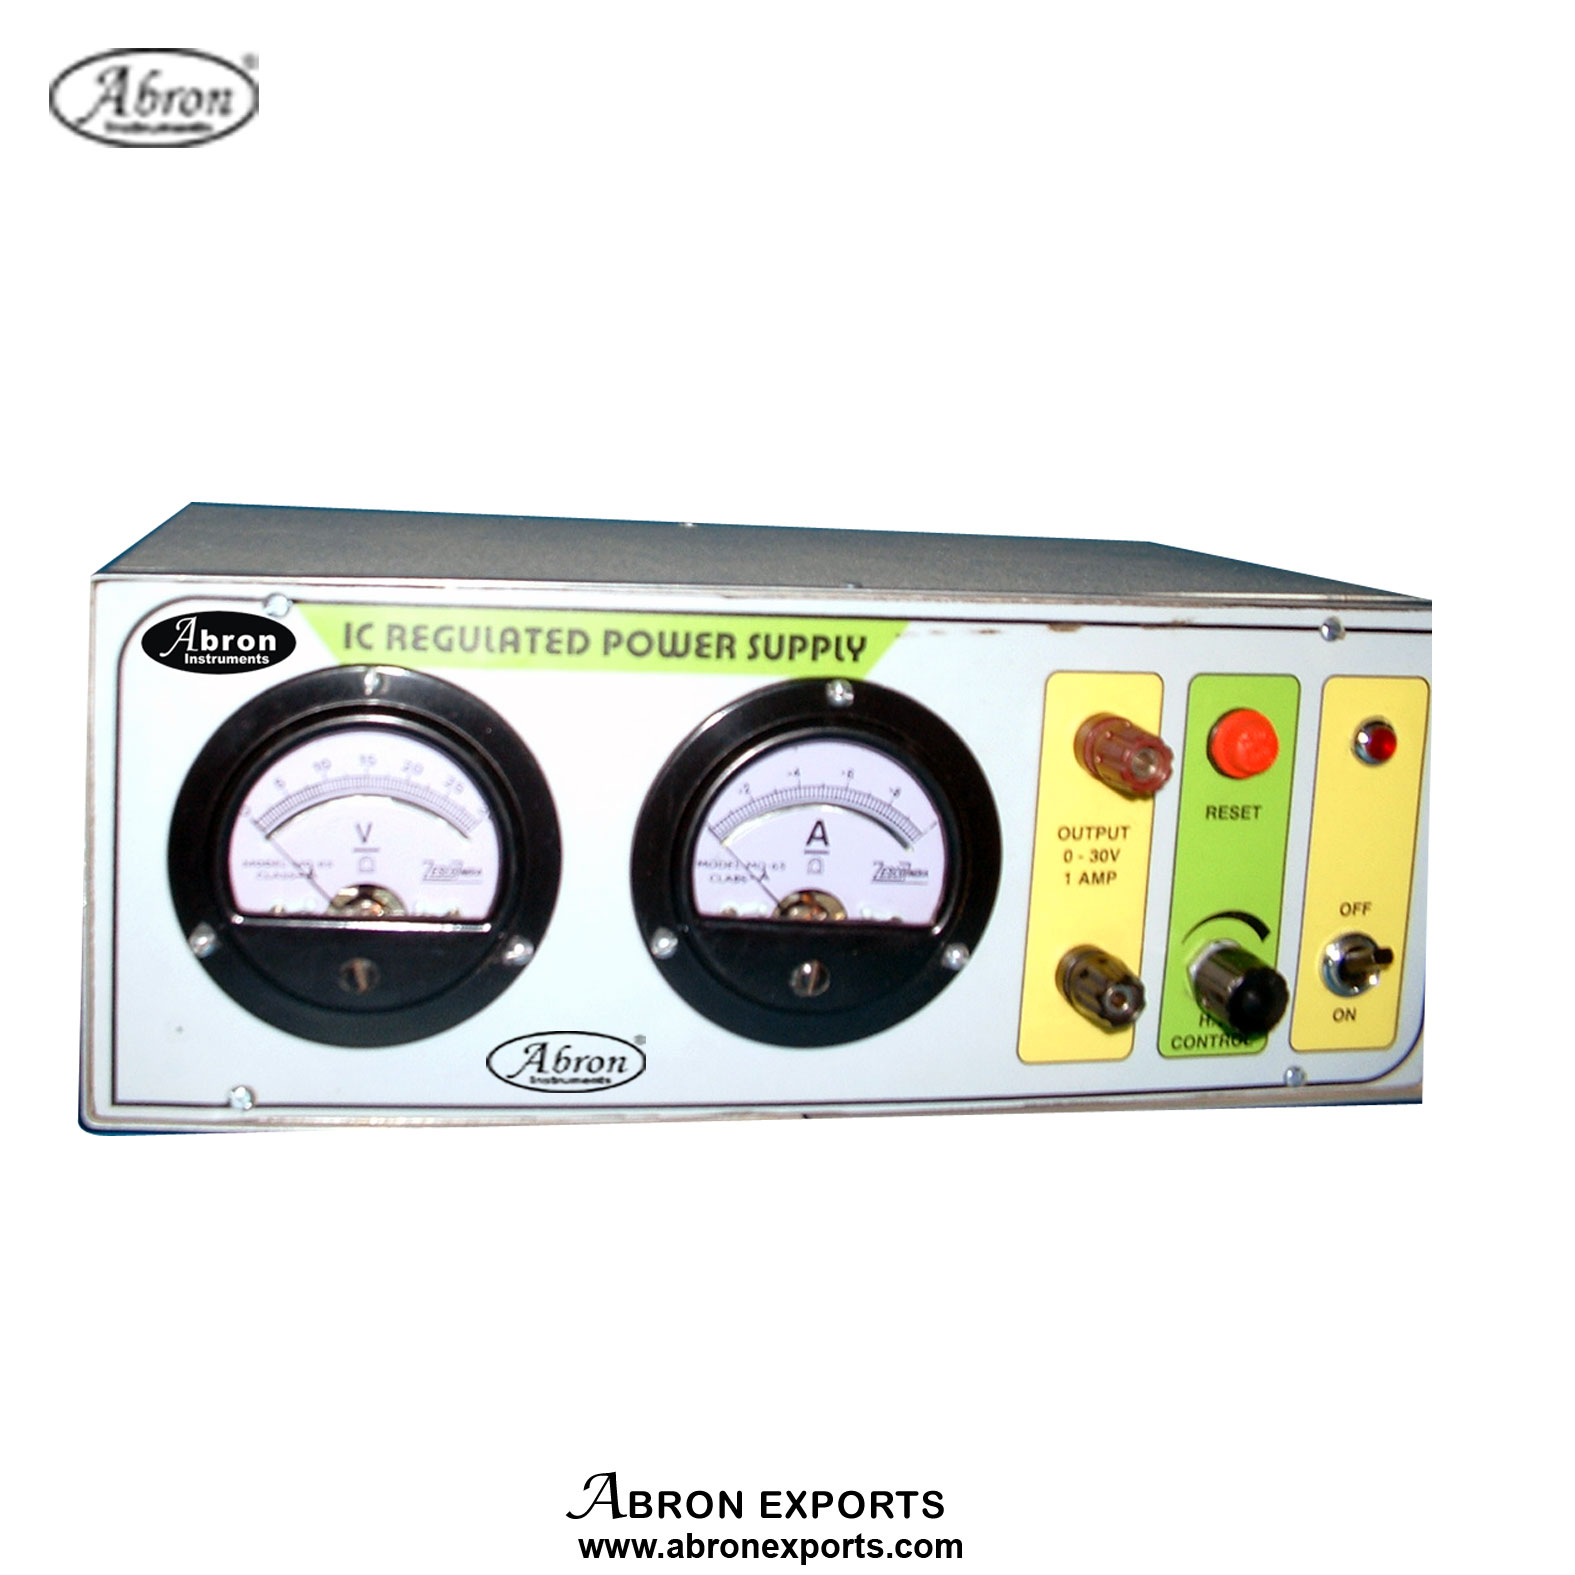 Power Supply 0-30V DC 1Amp 2 dial meter Digital LED meter Variable AE-1375A301